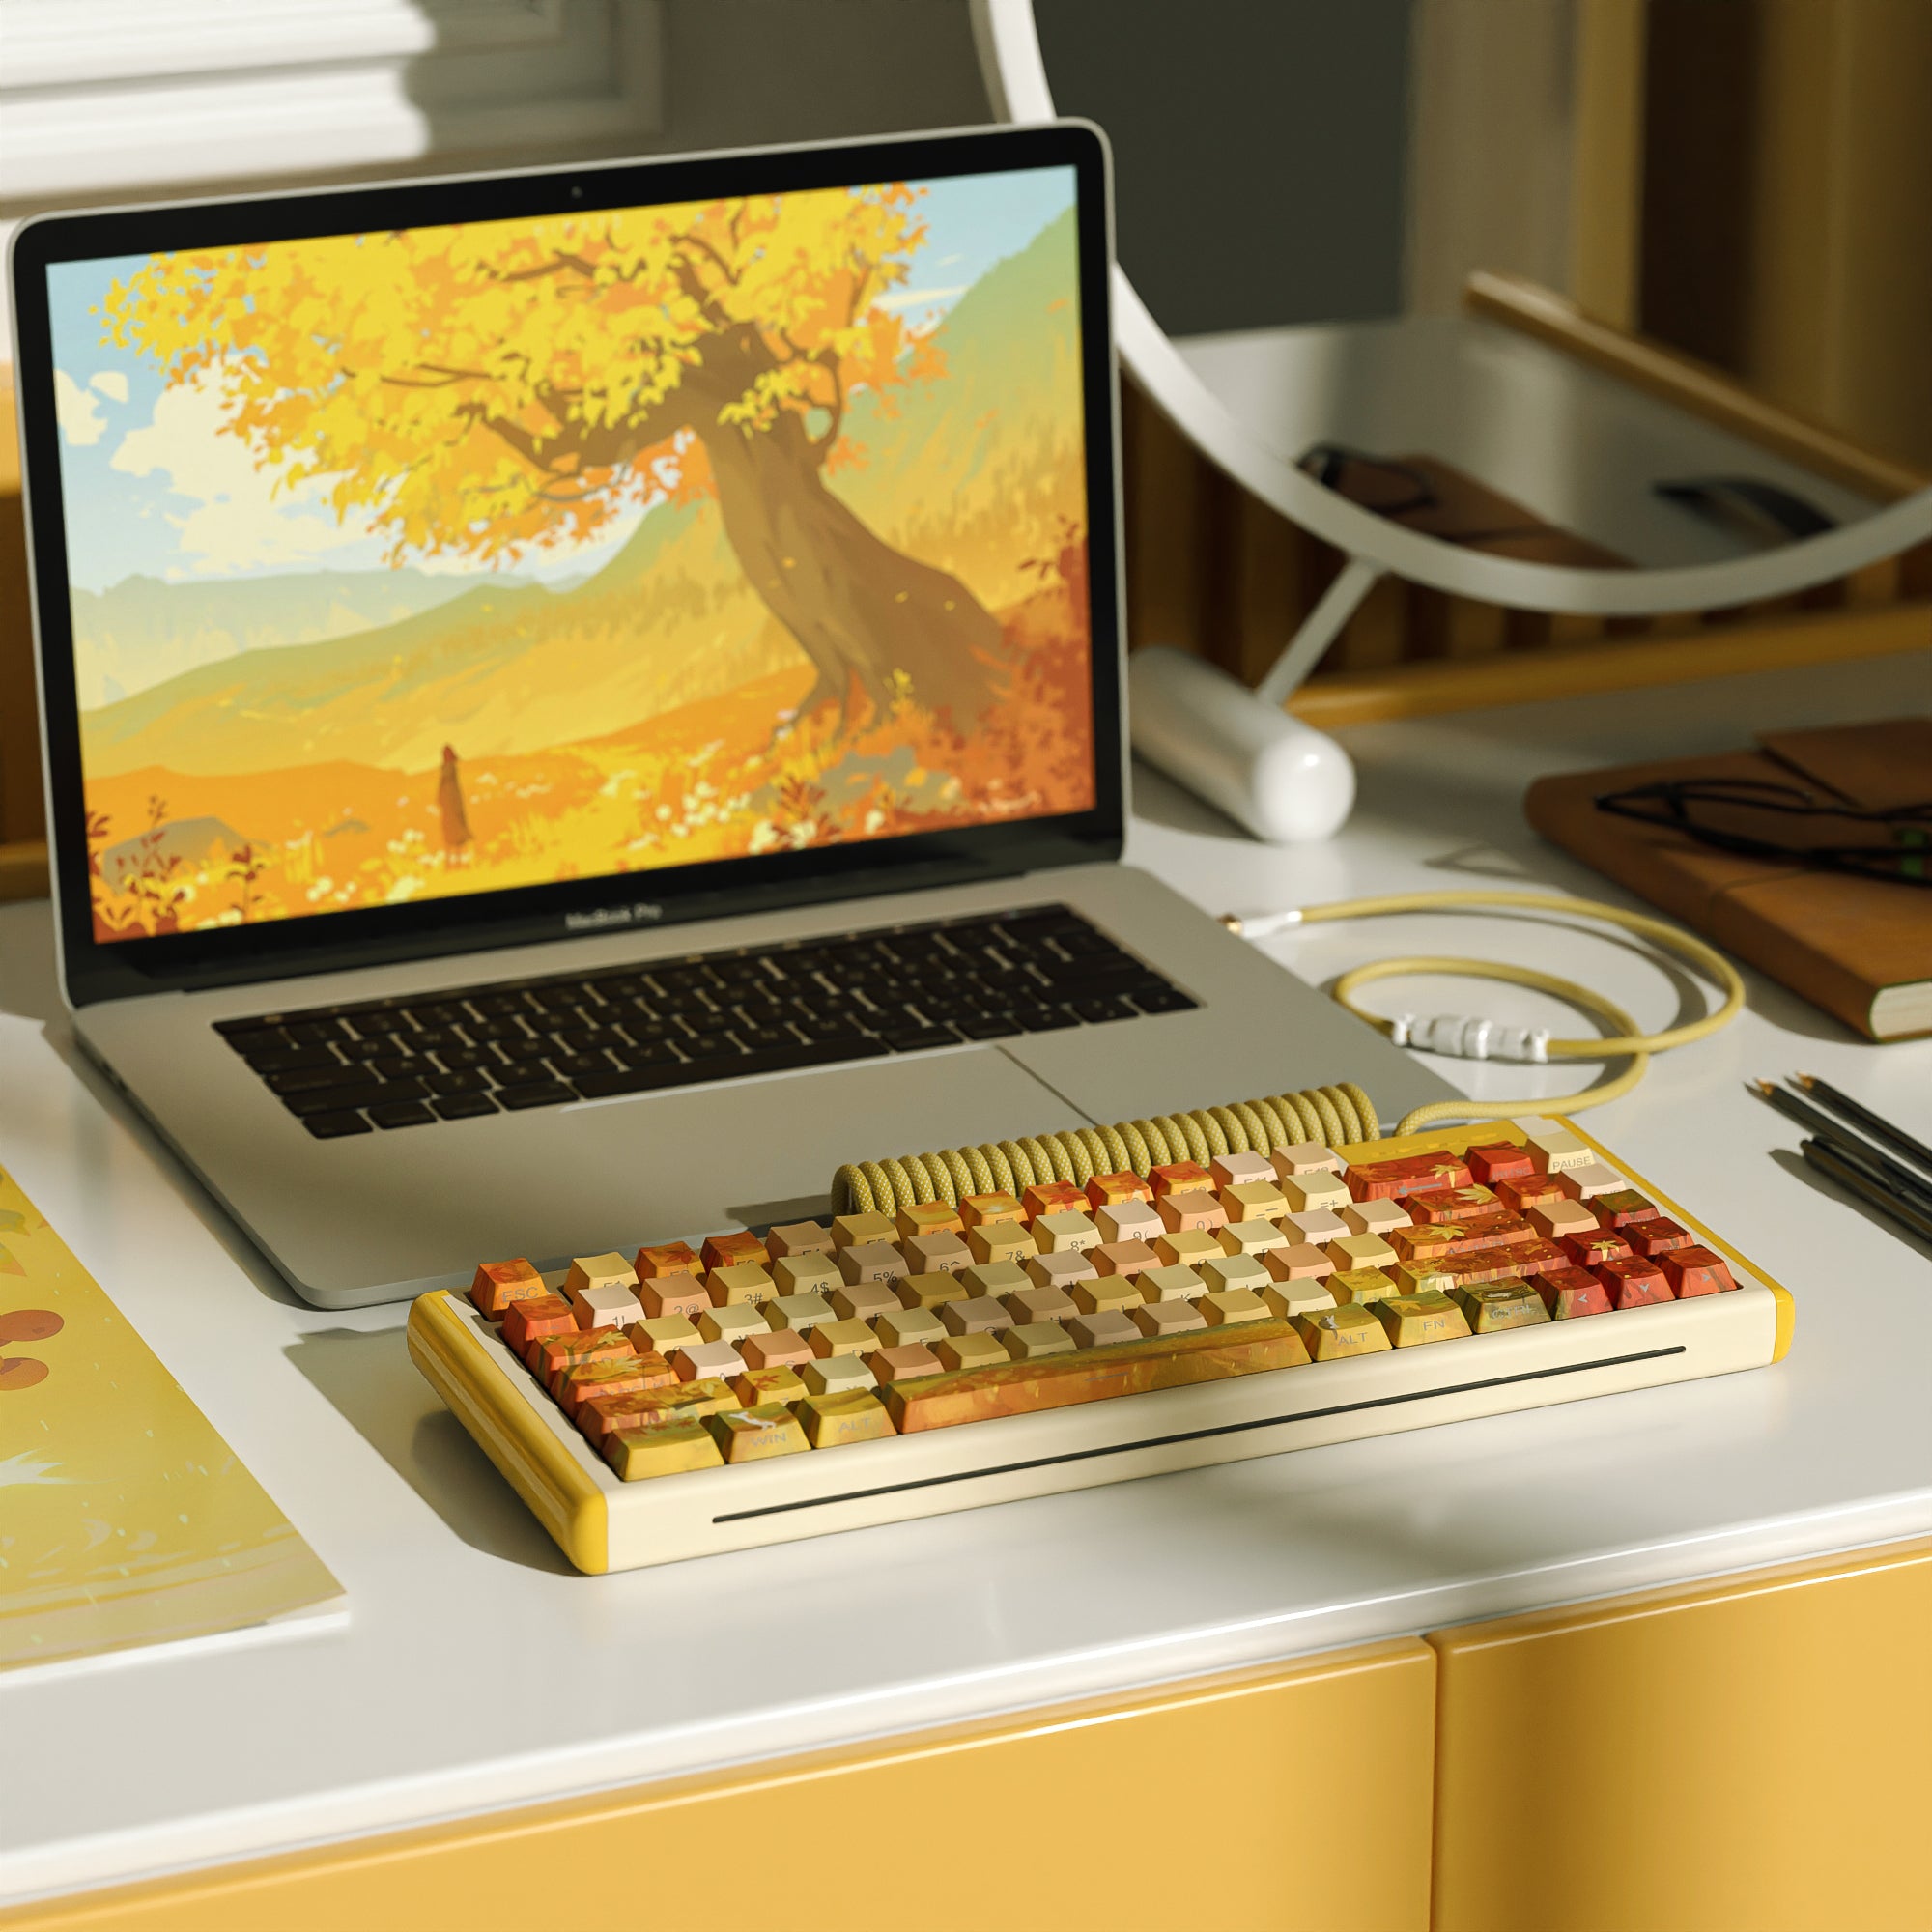 Dustsilver K84 New Arrival Autumn Tales Wired 75% layout Mechanical Keyboard